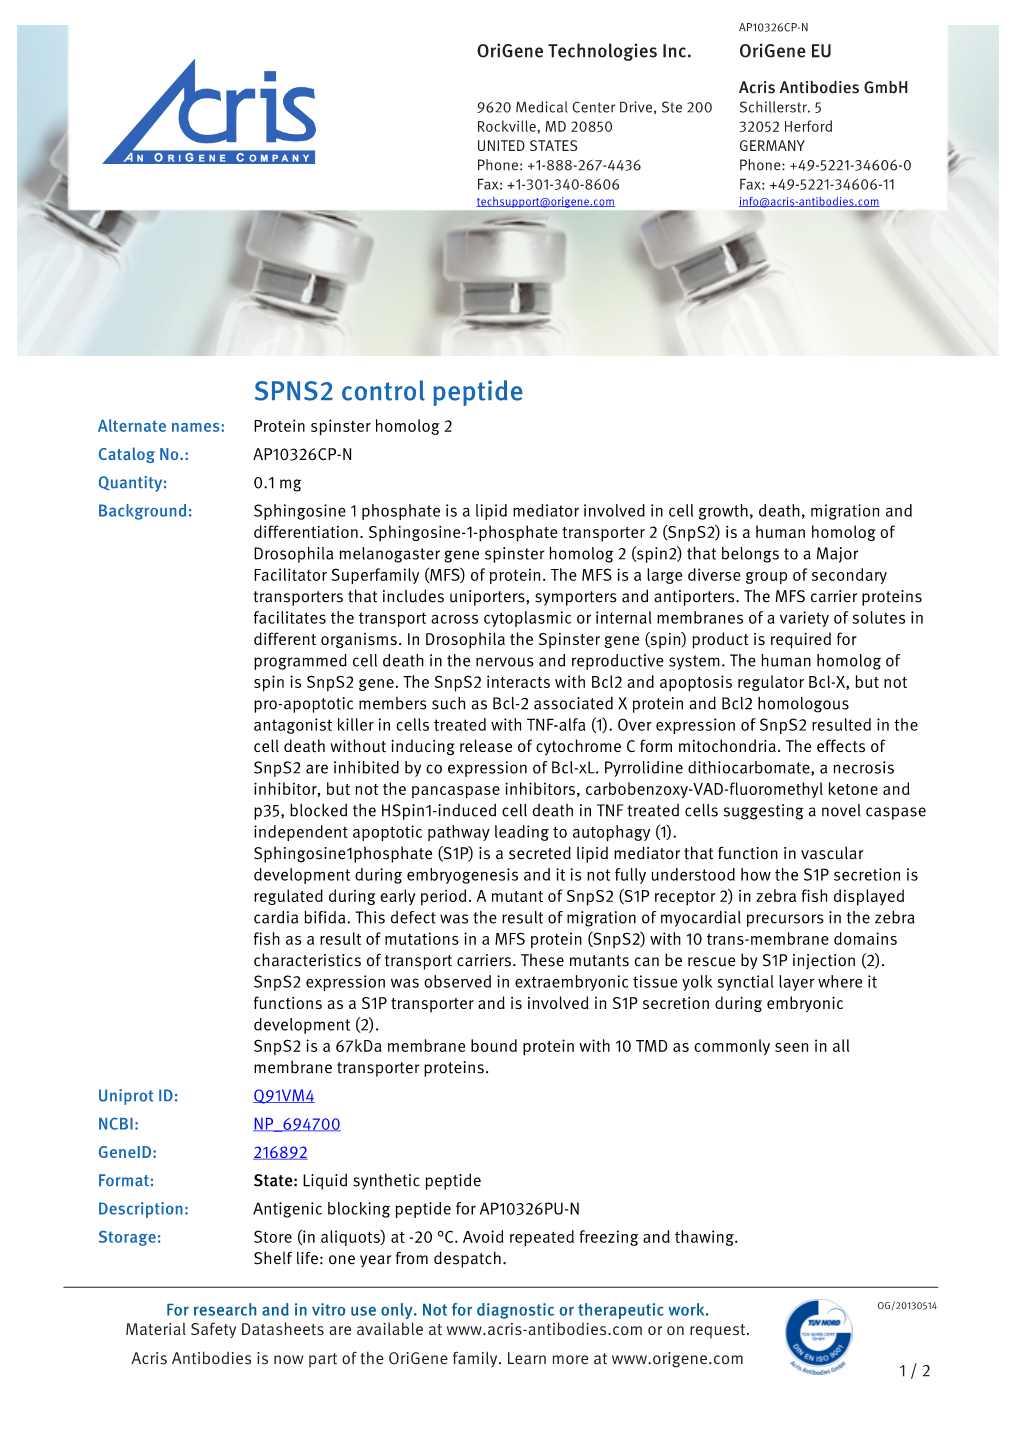 SPNS2 Control Peptide